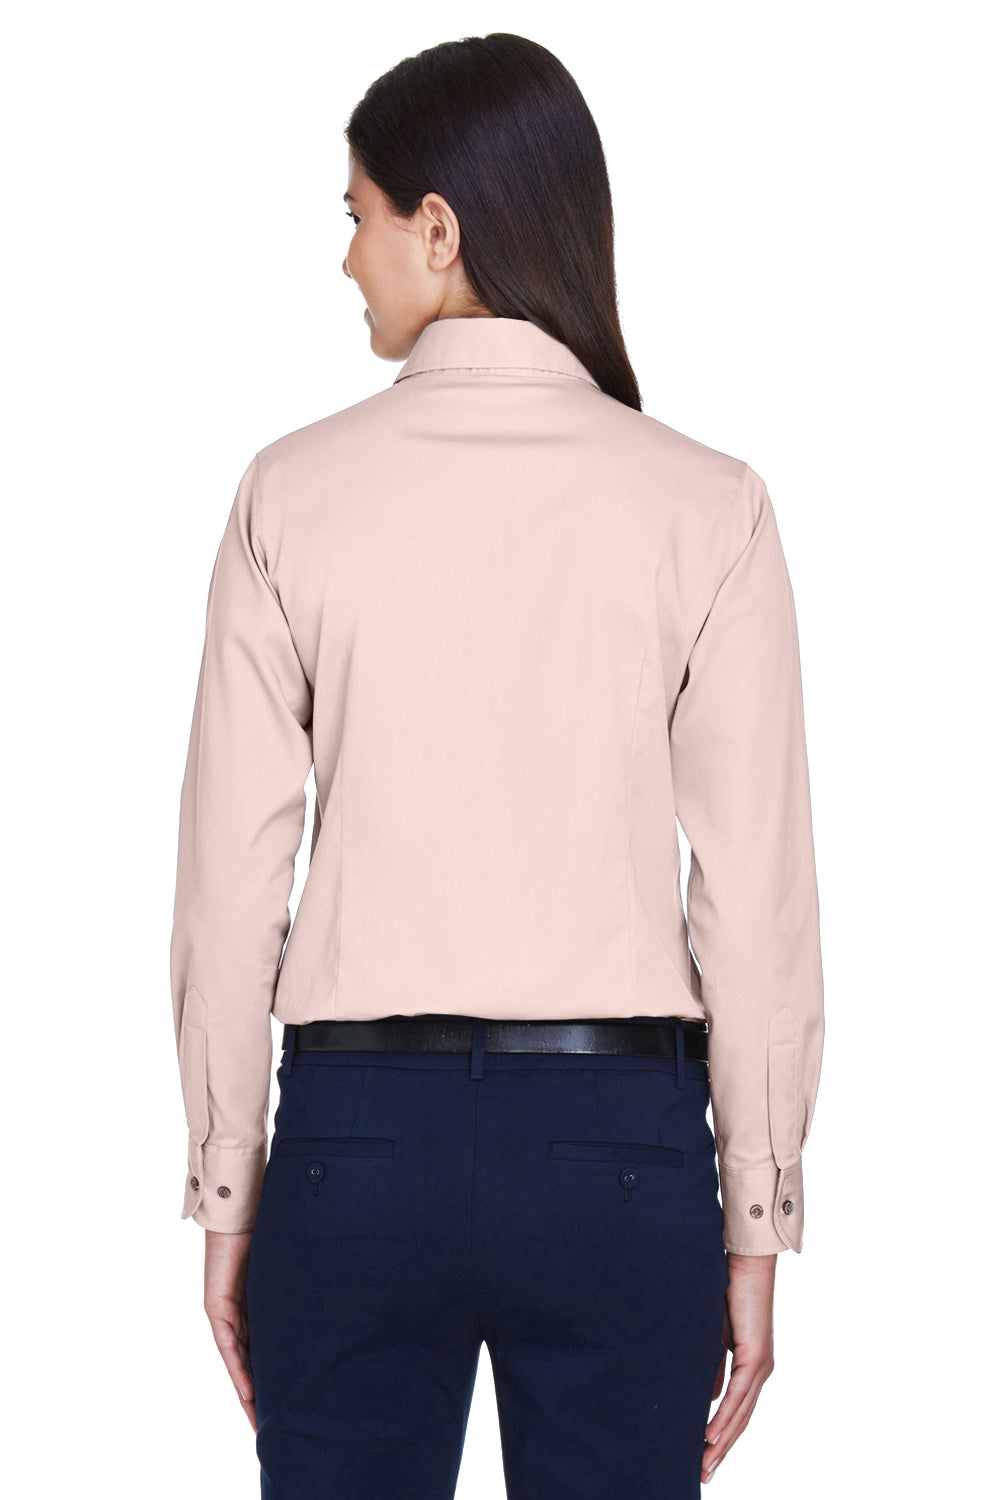 Harriton M500W Womens Wrinkle Resistant Long Sleeve Button Down Shirt Blush Pink Back